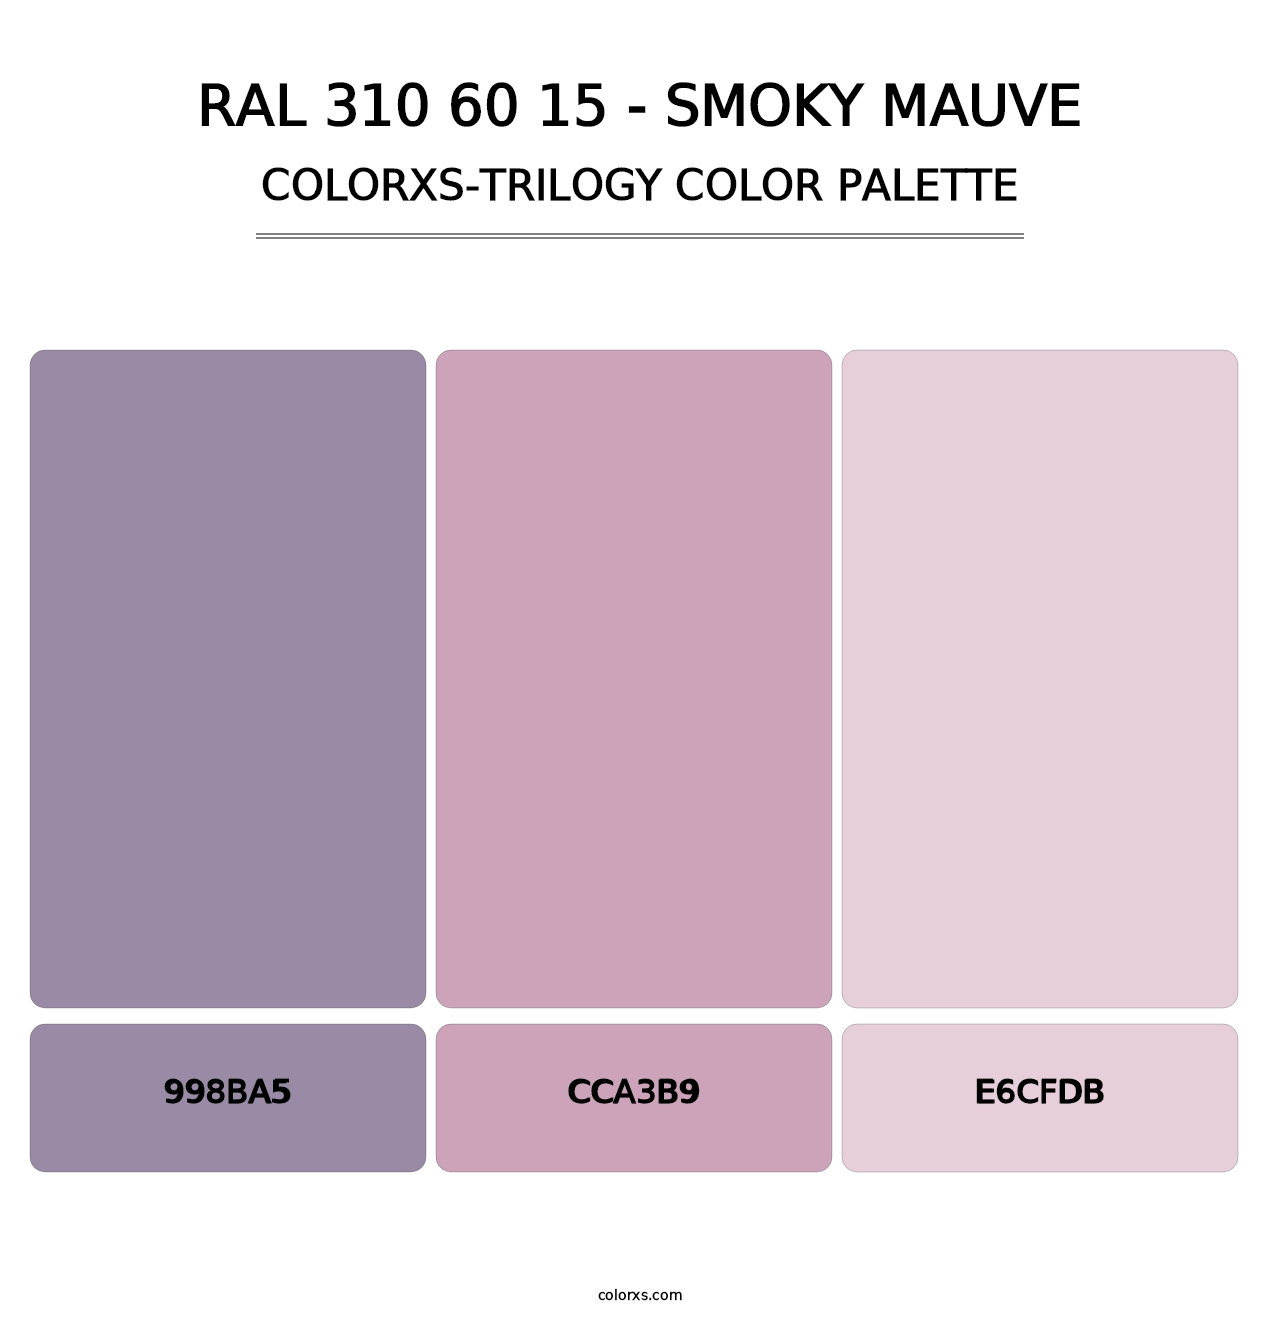 RAL 310 60 15 - Smoky Mauve - Colorxs Trilogy Palette